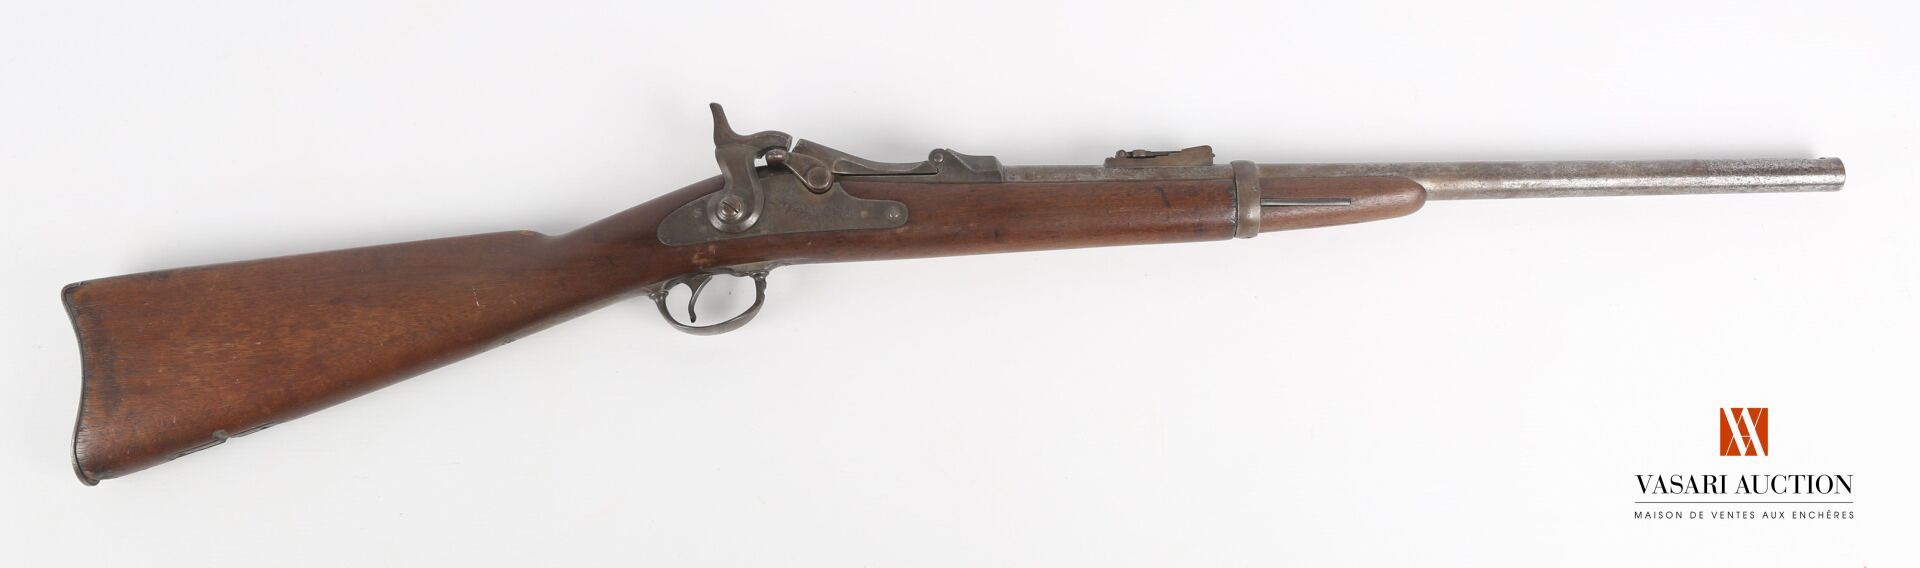 Null Carabine de selle réglementaire SPRINGFIELD TRAPDOOR modèle 1873, percussio&hellip;